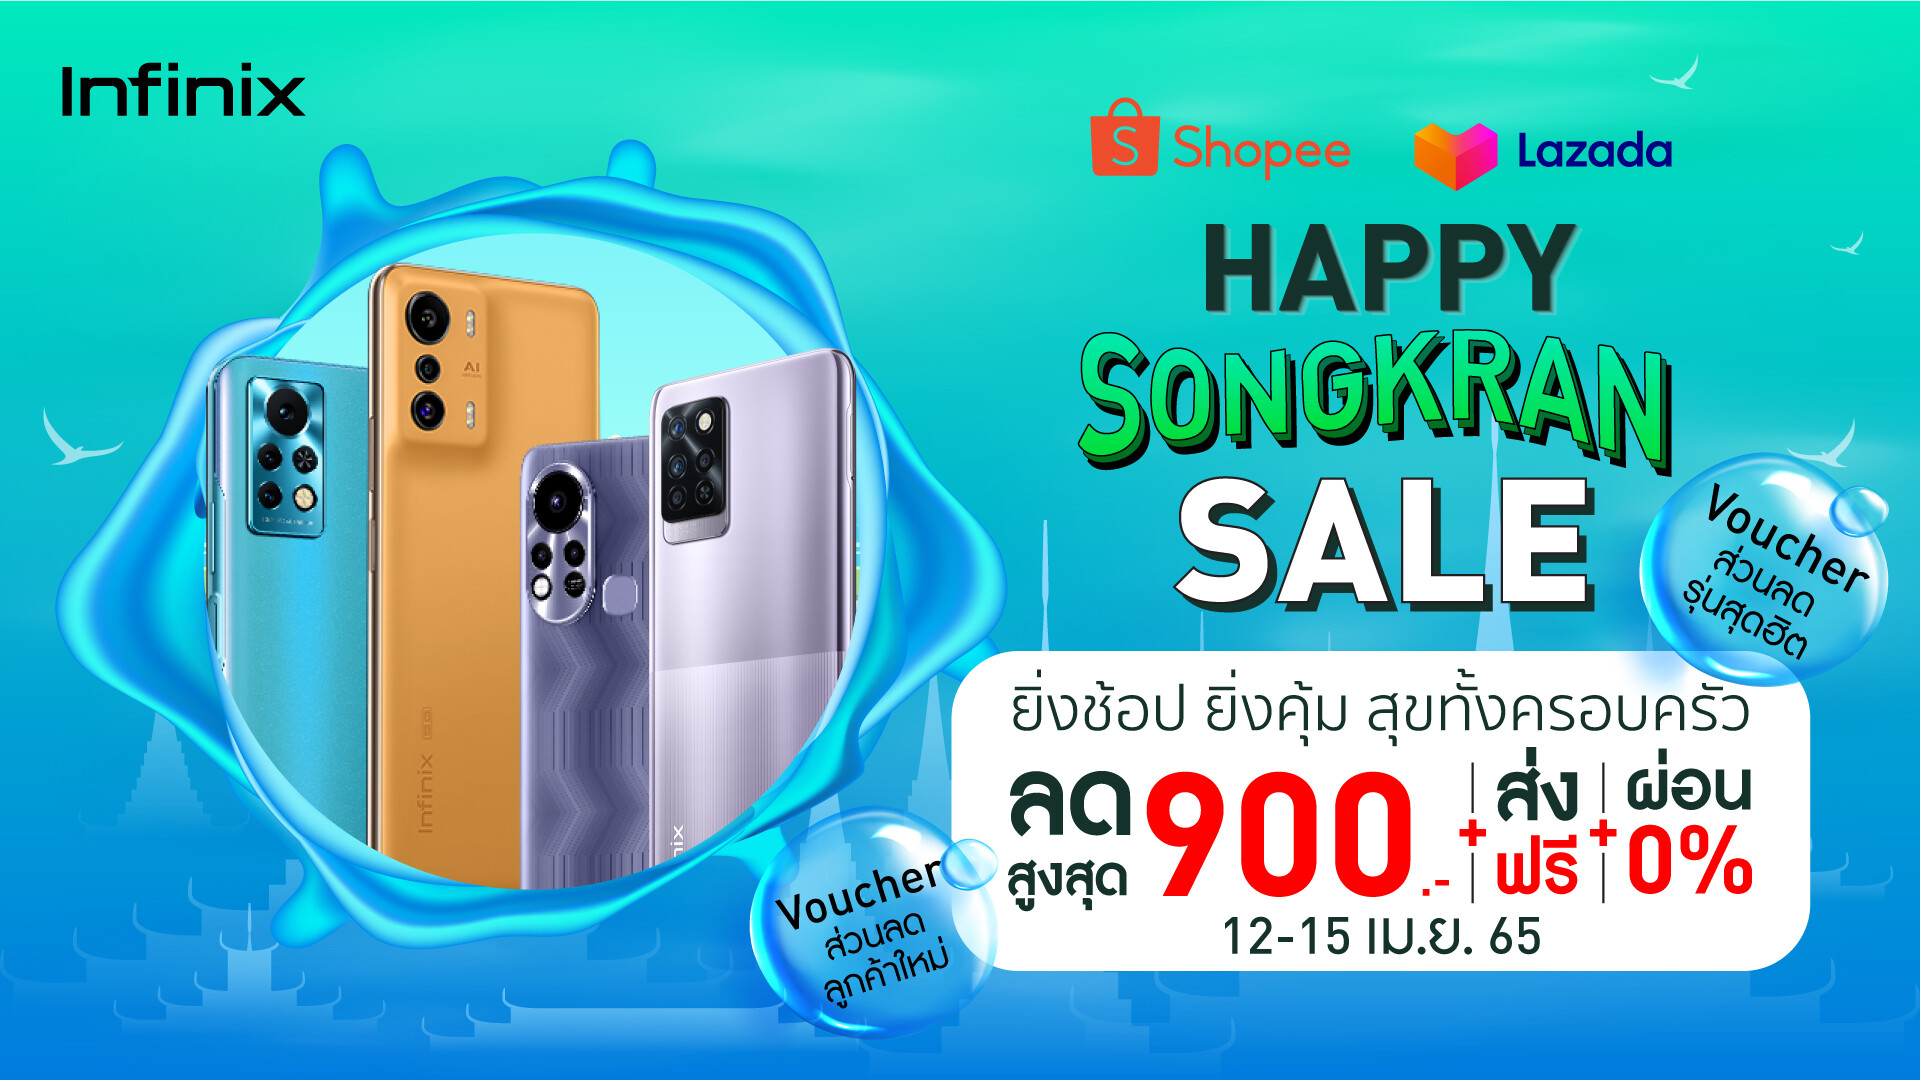 Infinix ส่งโปรแรงสุขทั้งครอบครัวกับ Happy Songkran Saleยิ่งช้อป ยิ่งคุ้ม ลดสูงสุด 900 บาท 12 - 15 เมษายนนี้